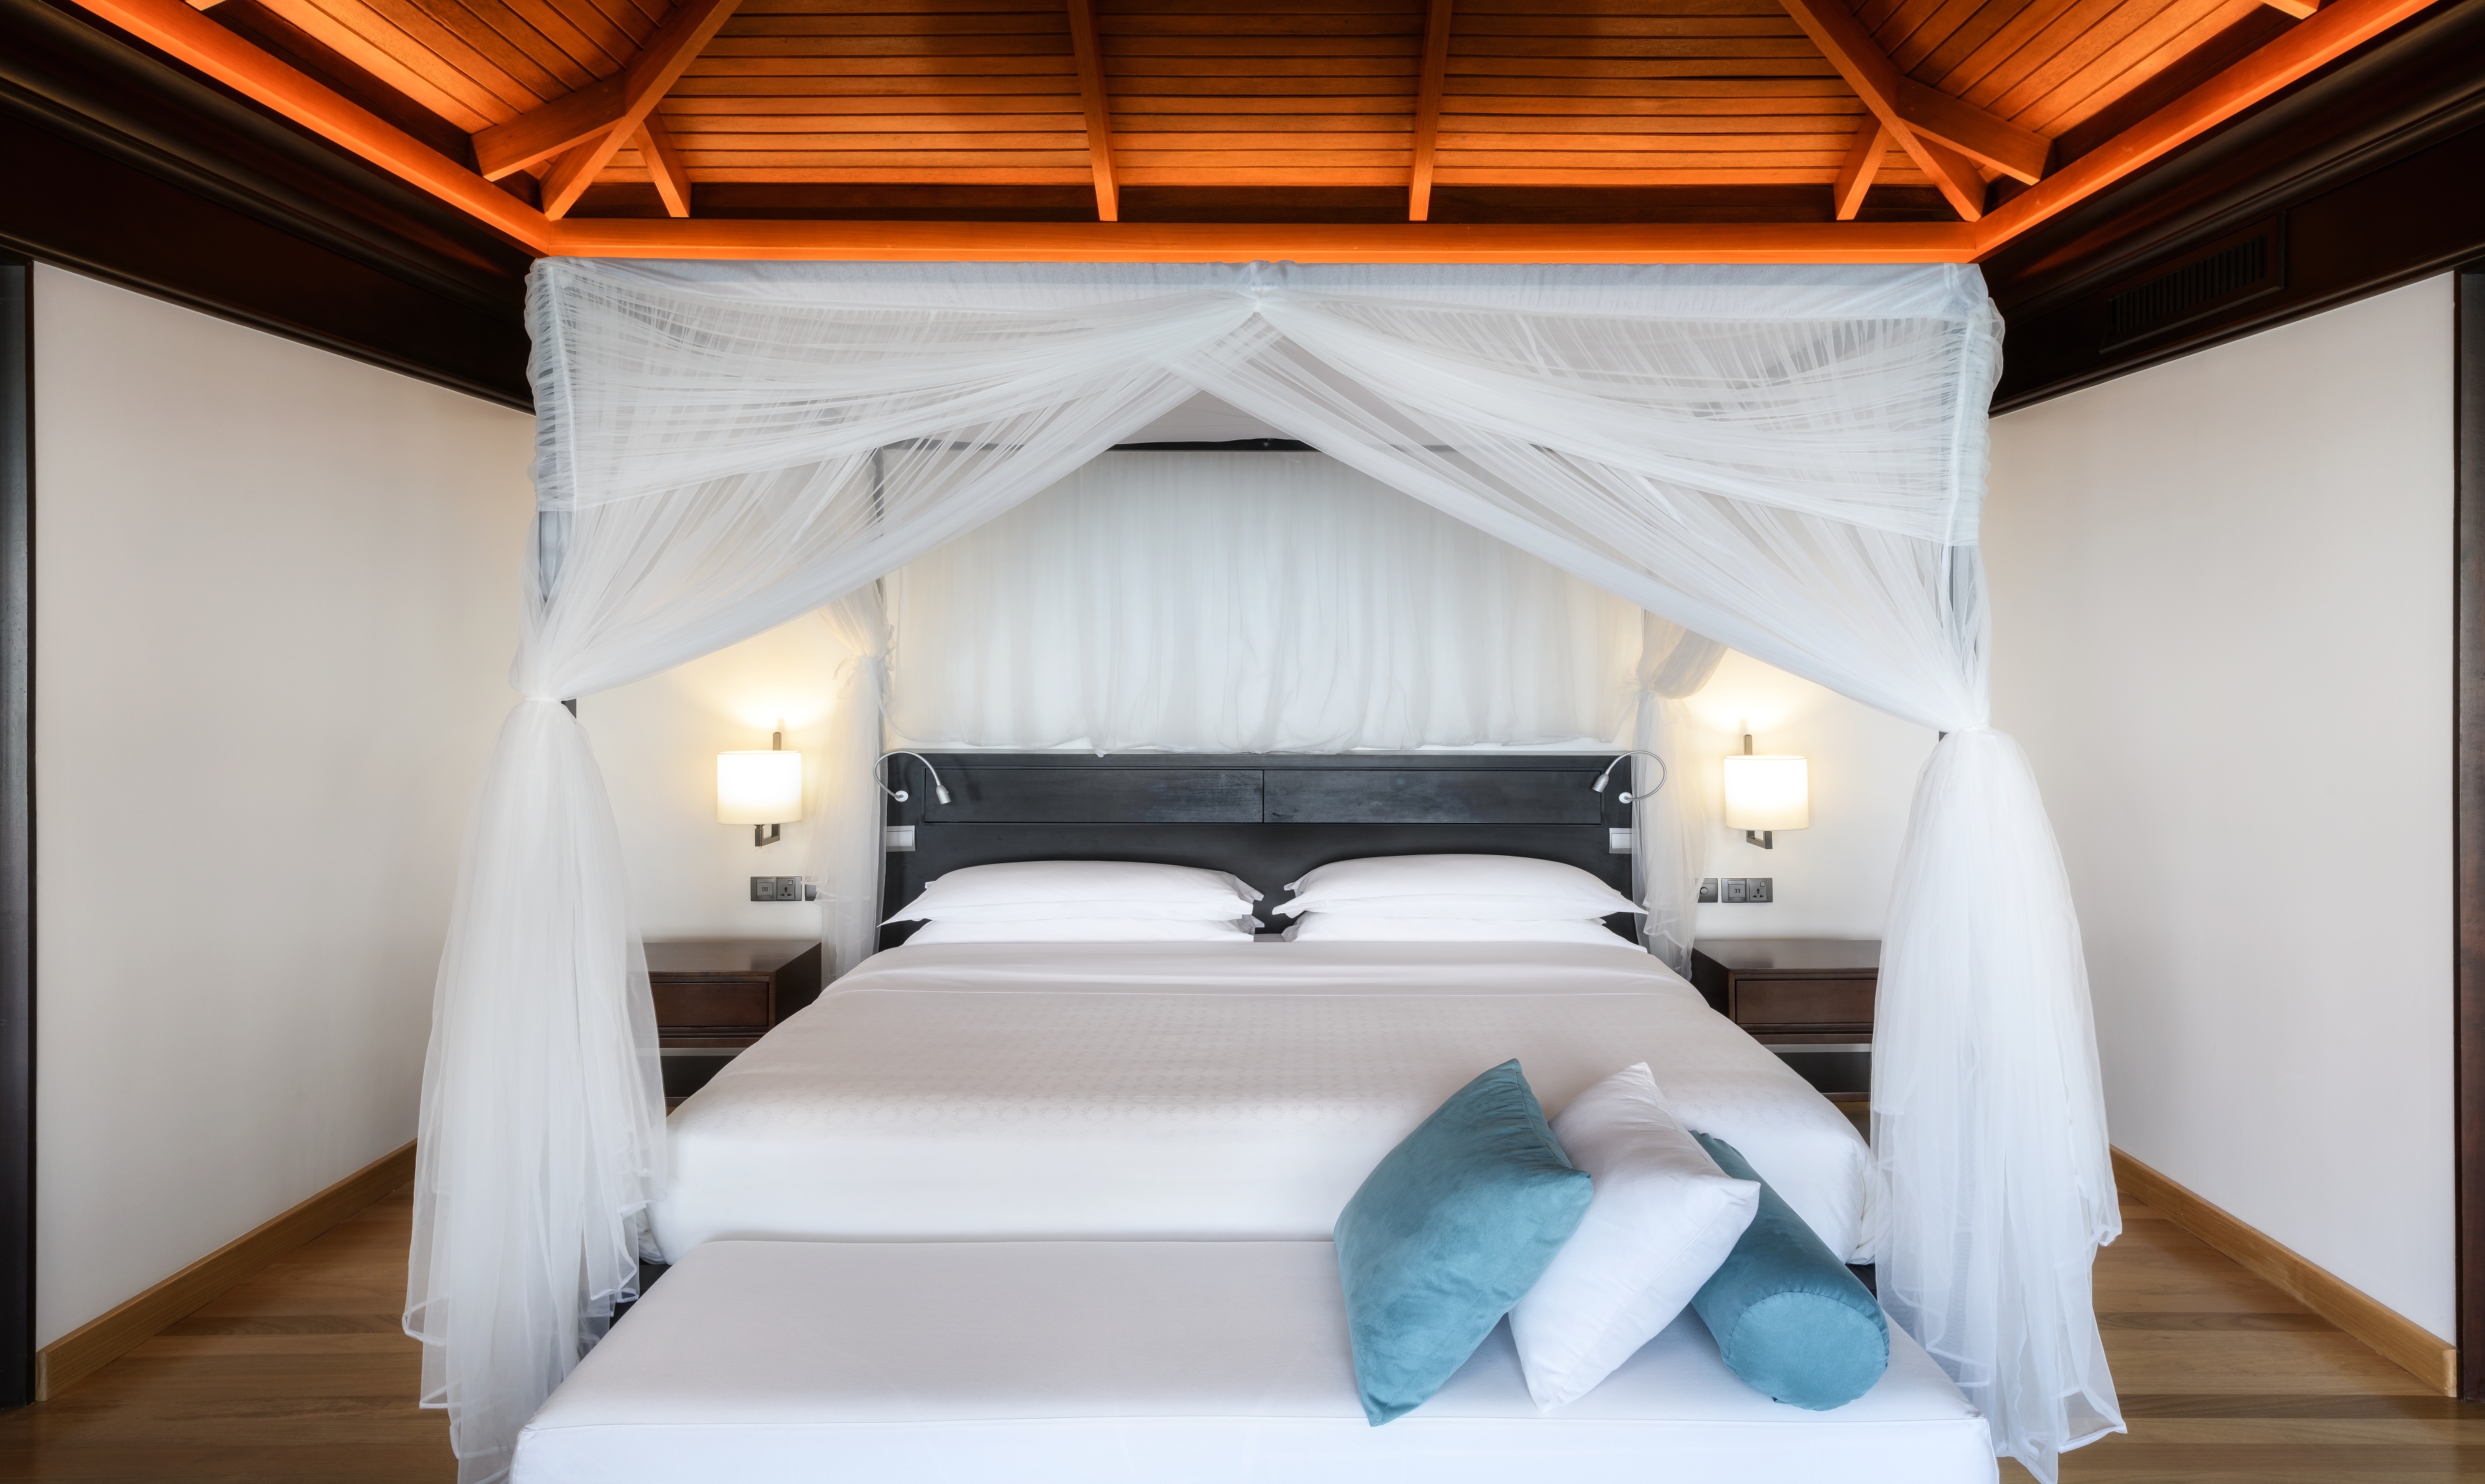 Sheraton Maldives Full Moon Resort & Spa - Two-bedroom Suite Master Bedroom, Kingsize Bed - PR by uschi liebl pr